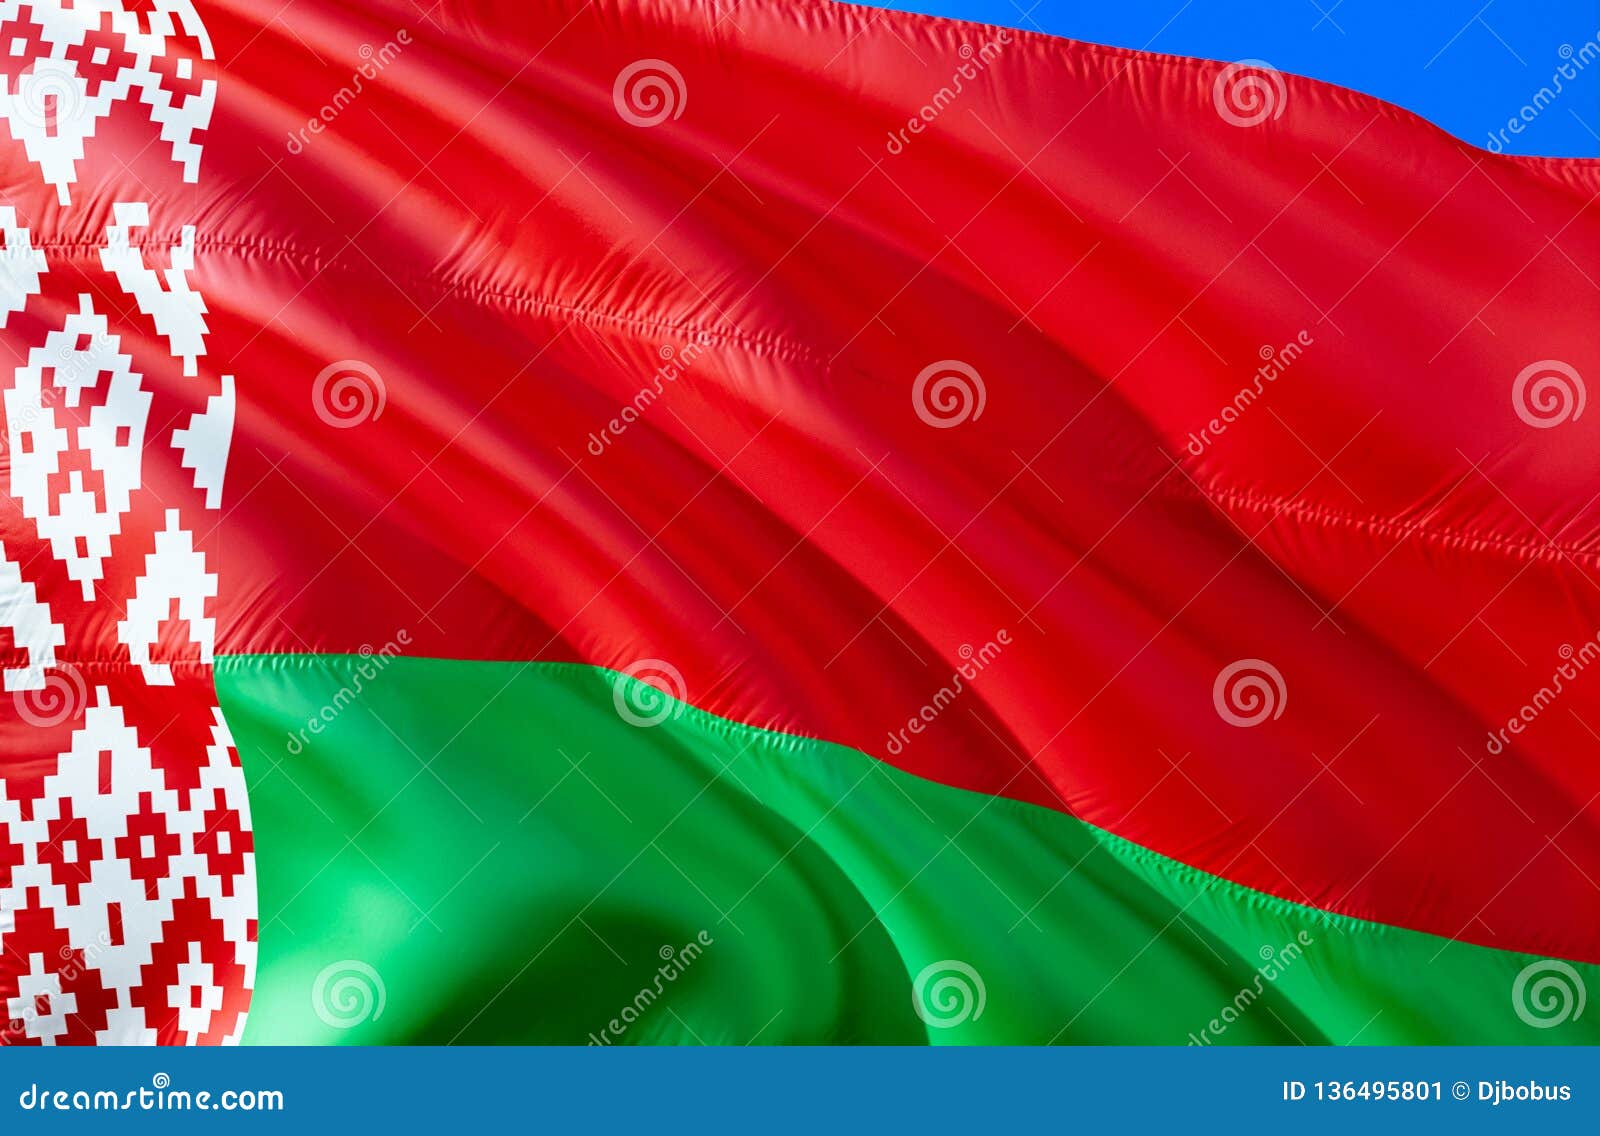 belarus HD wallpapers backgrounds